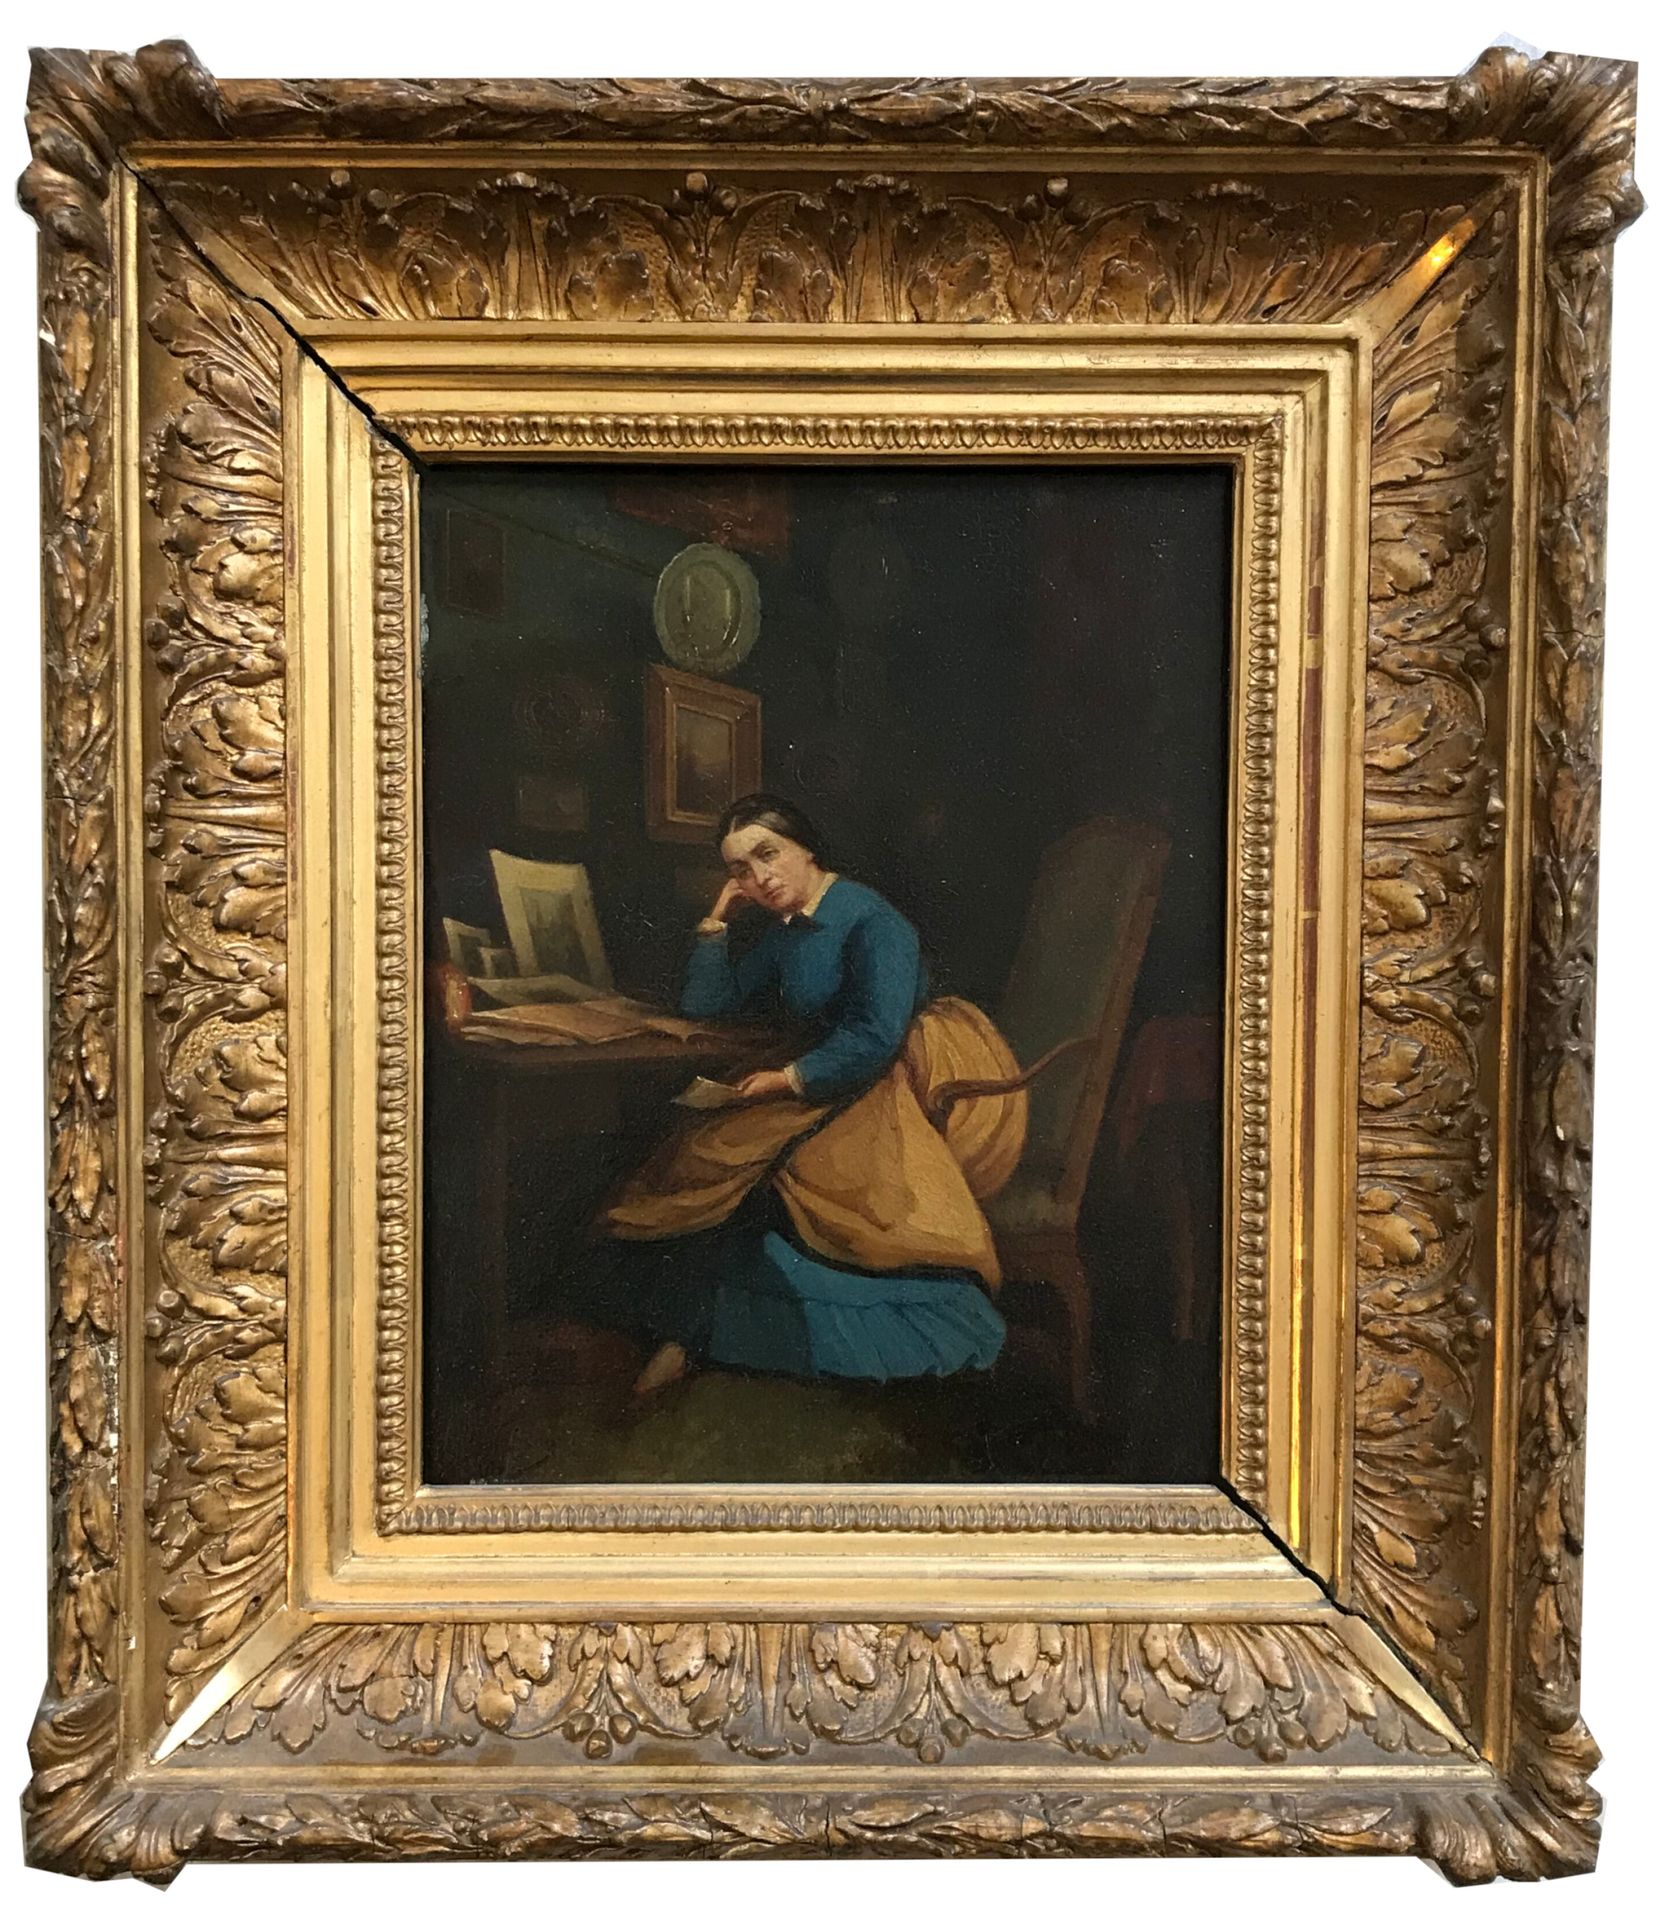 Null 儒勒-菲利昂 (1824-1883)

深思熟虑的年轻女孩

板上油彩

左下方有签名

25 x 20厘米

美丽的镀金灰泥框架